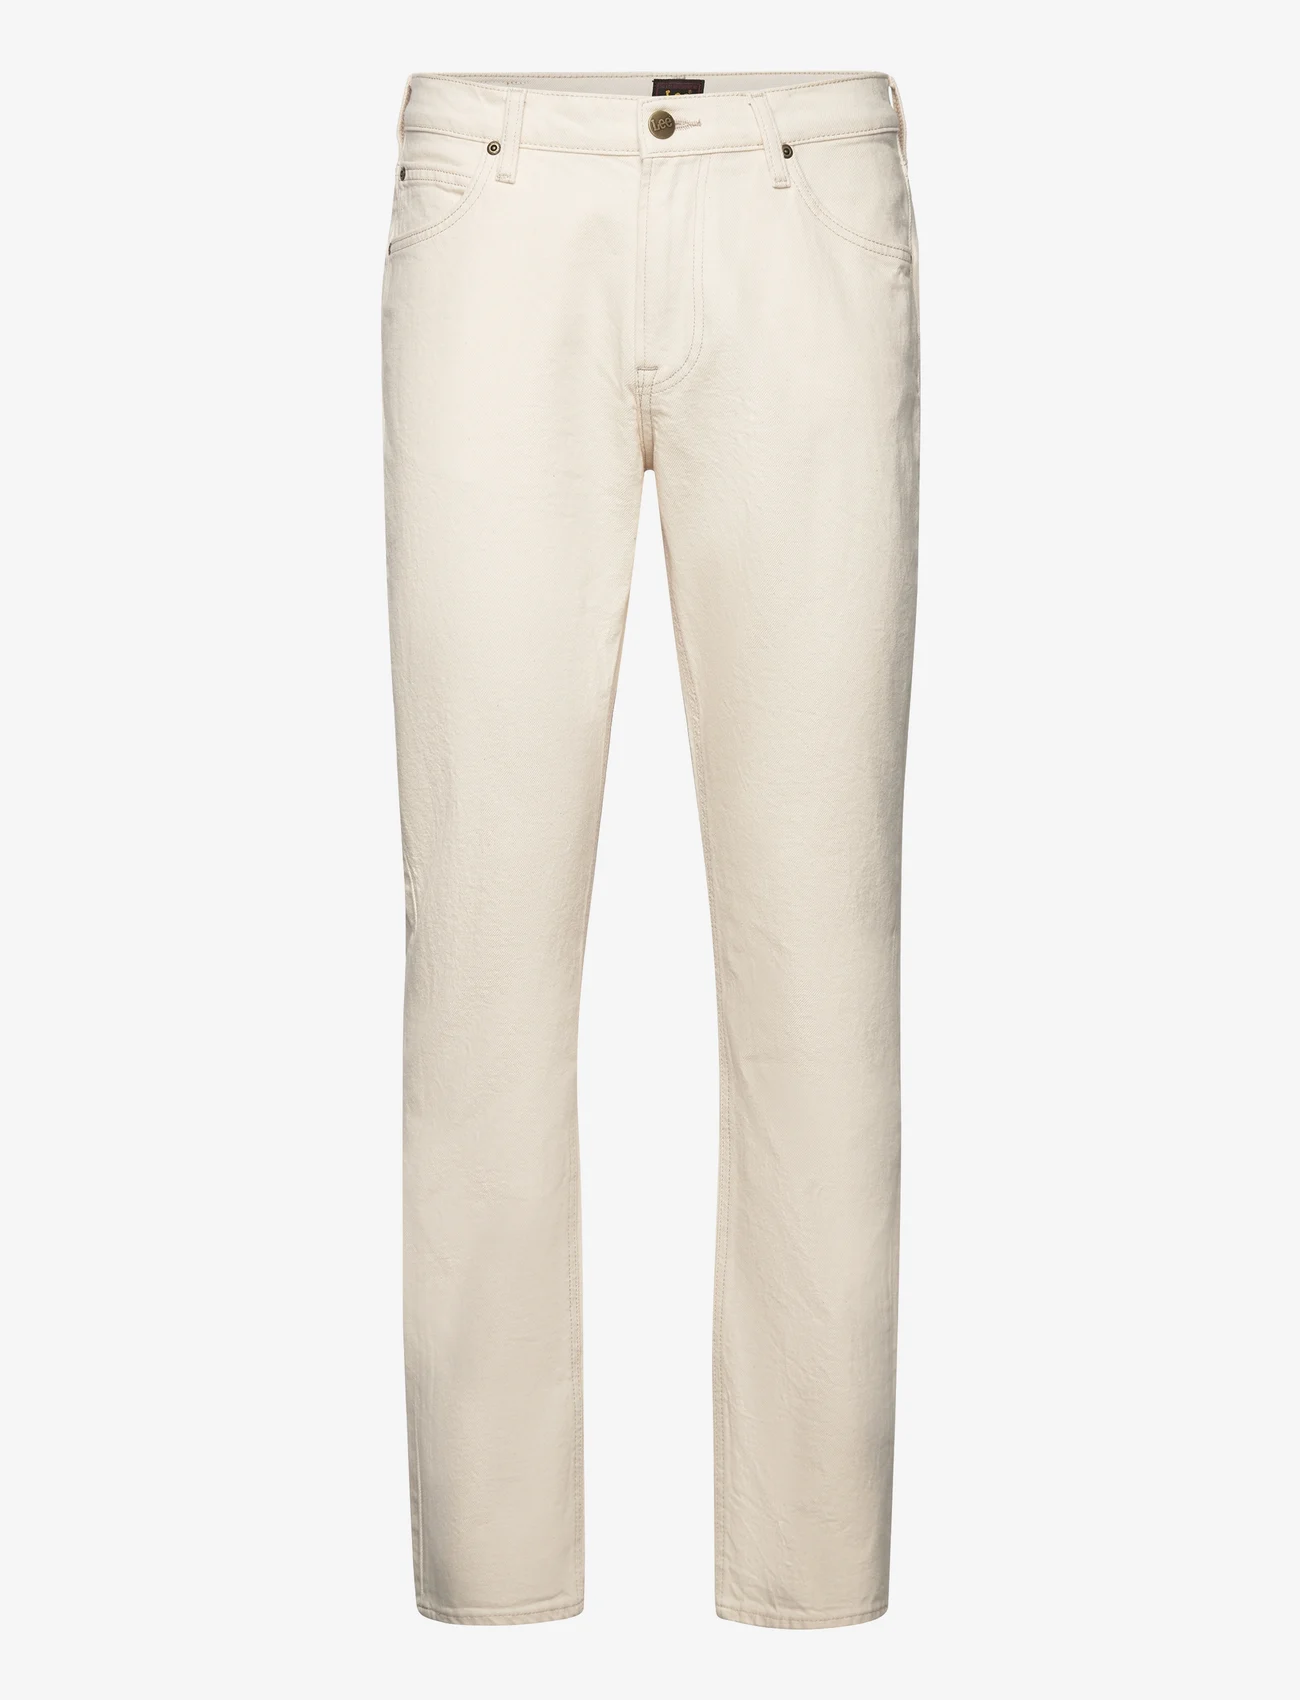 Lee Jeans - WEST - džinsi - off white - 0